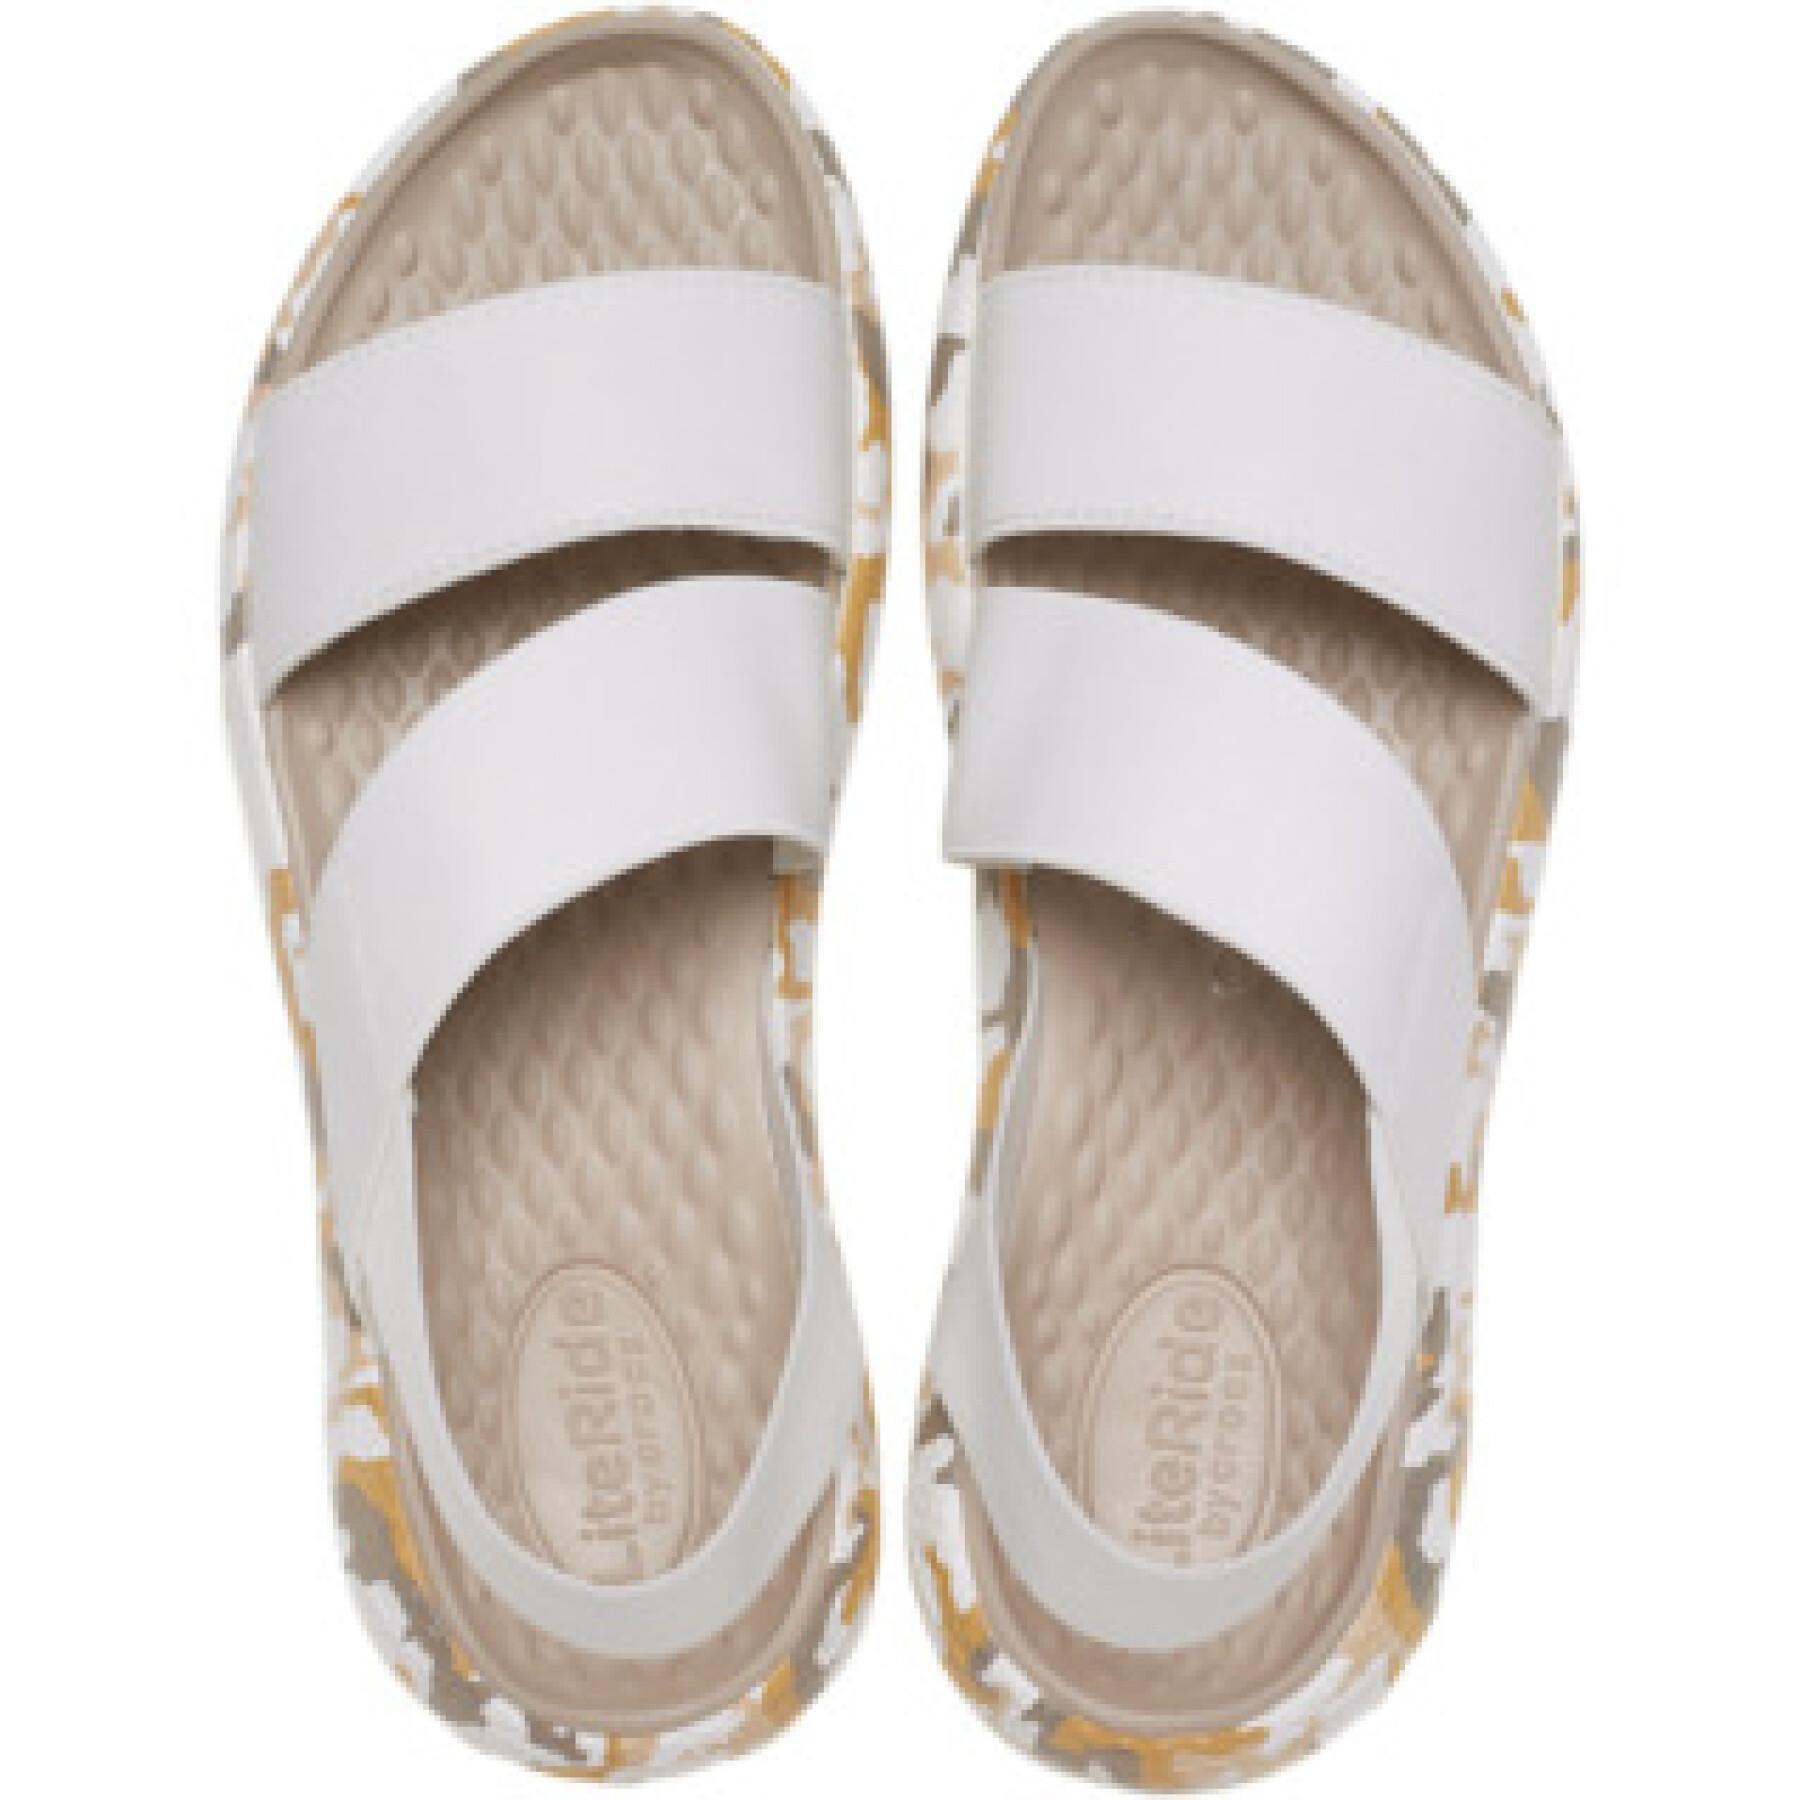 Women's sandals Crocs LiteRide Prnted Camo Stretch